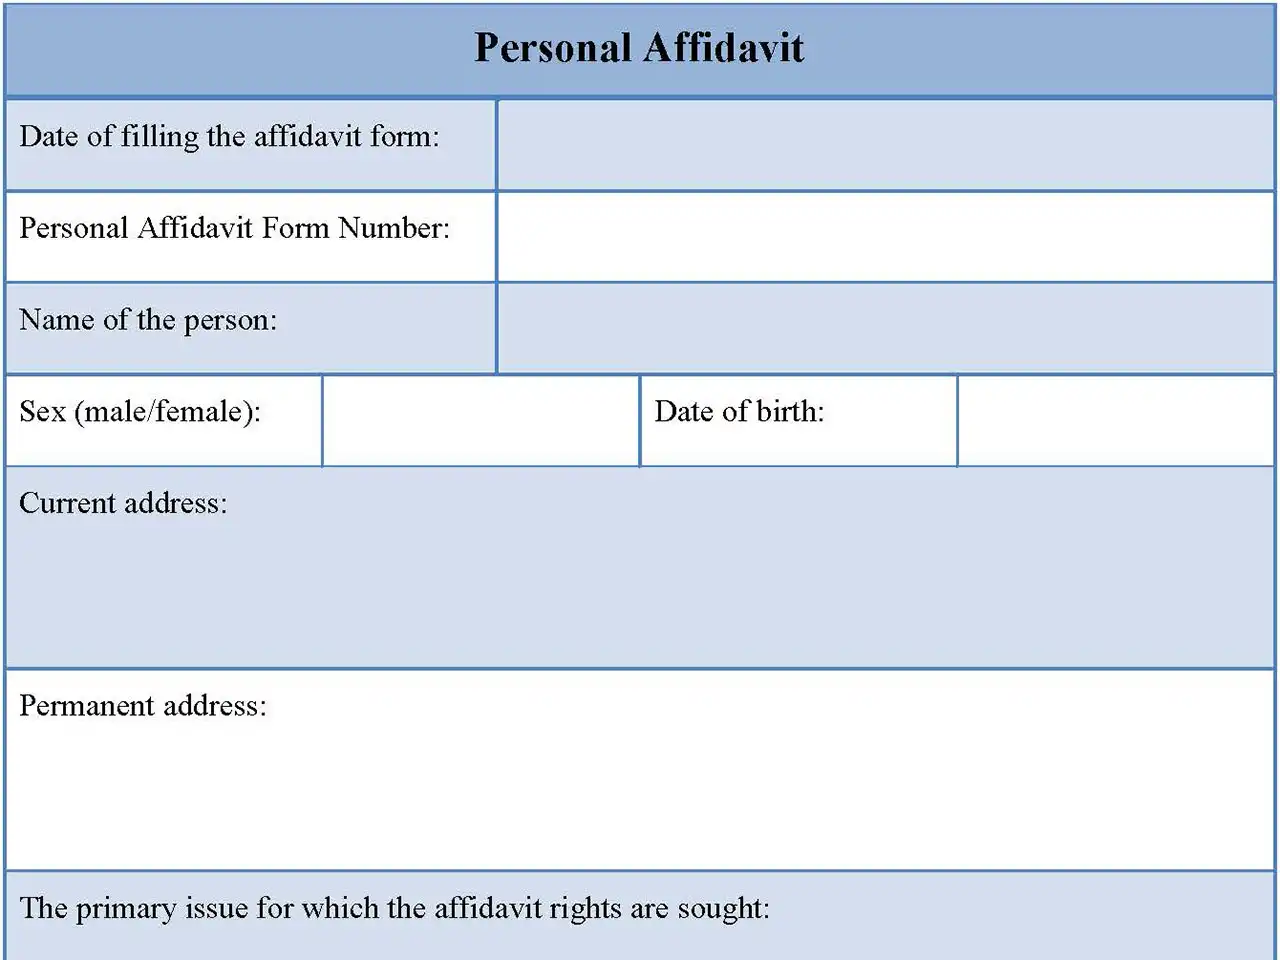 Personal Affidavit Form